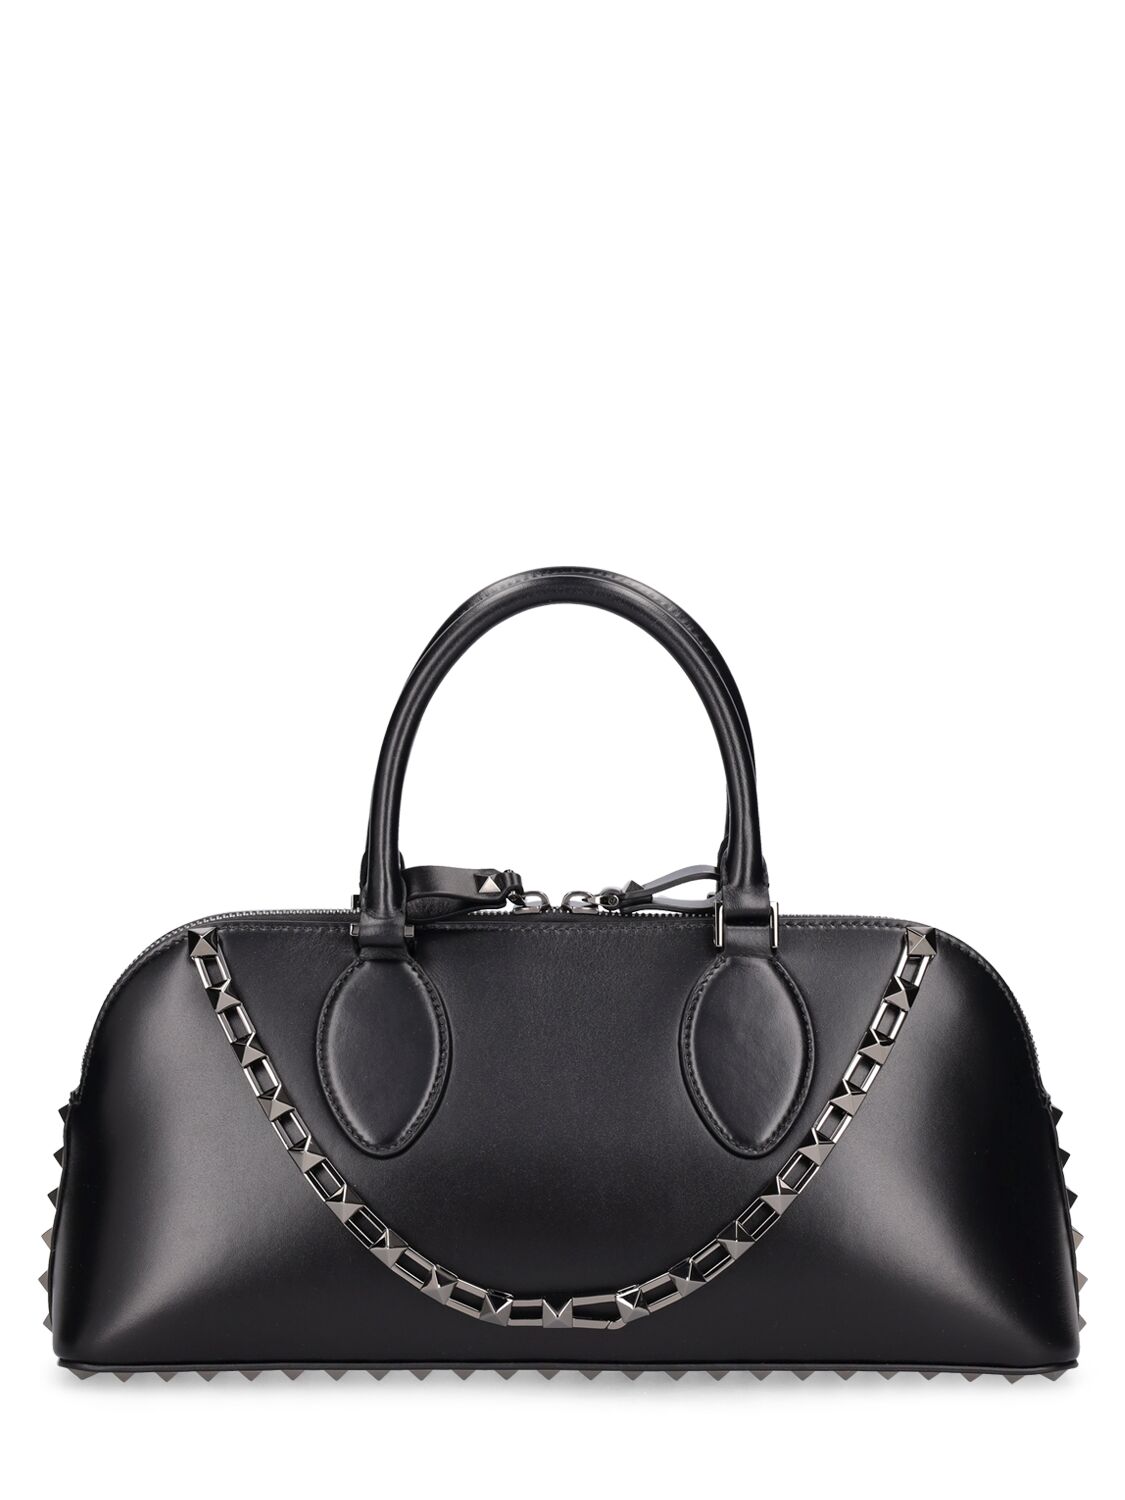 Valentino Garavani Rockstud Leather Duffle Bag In Black